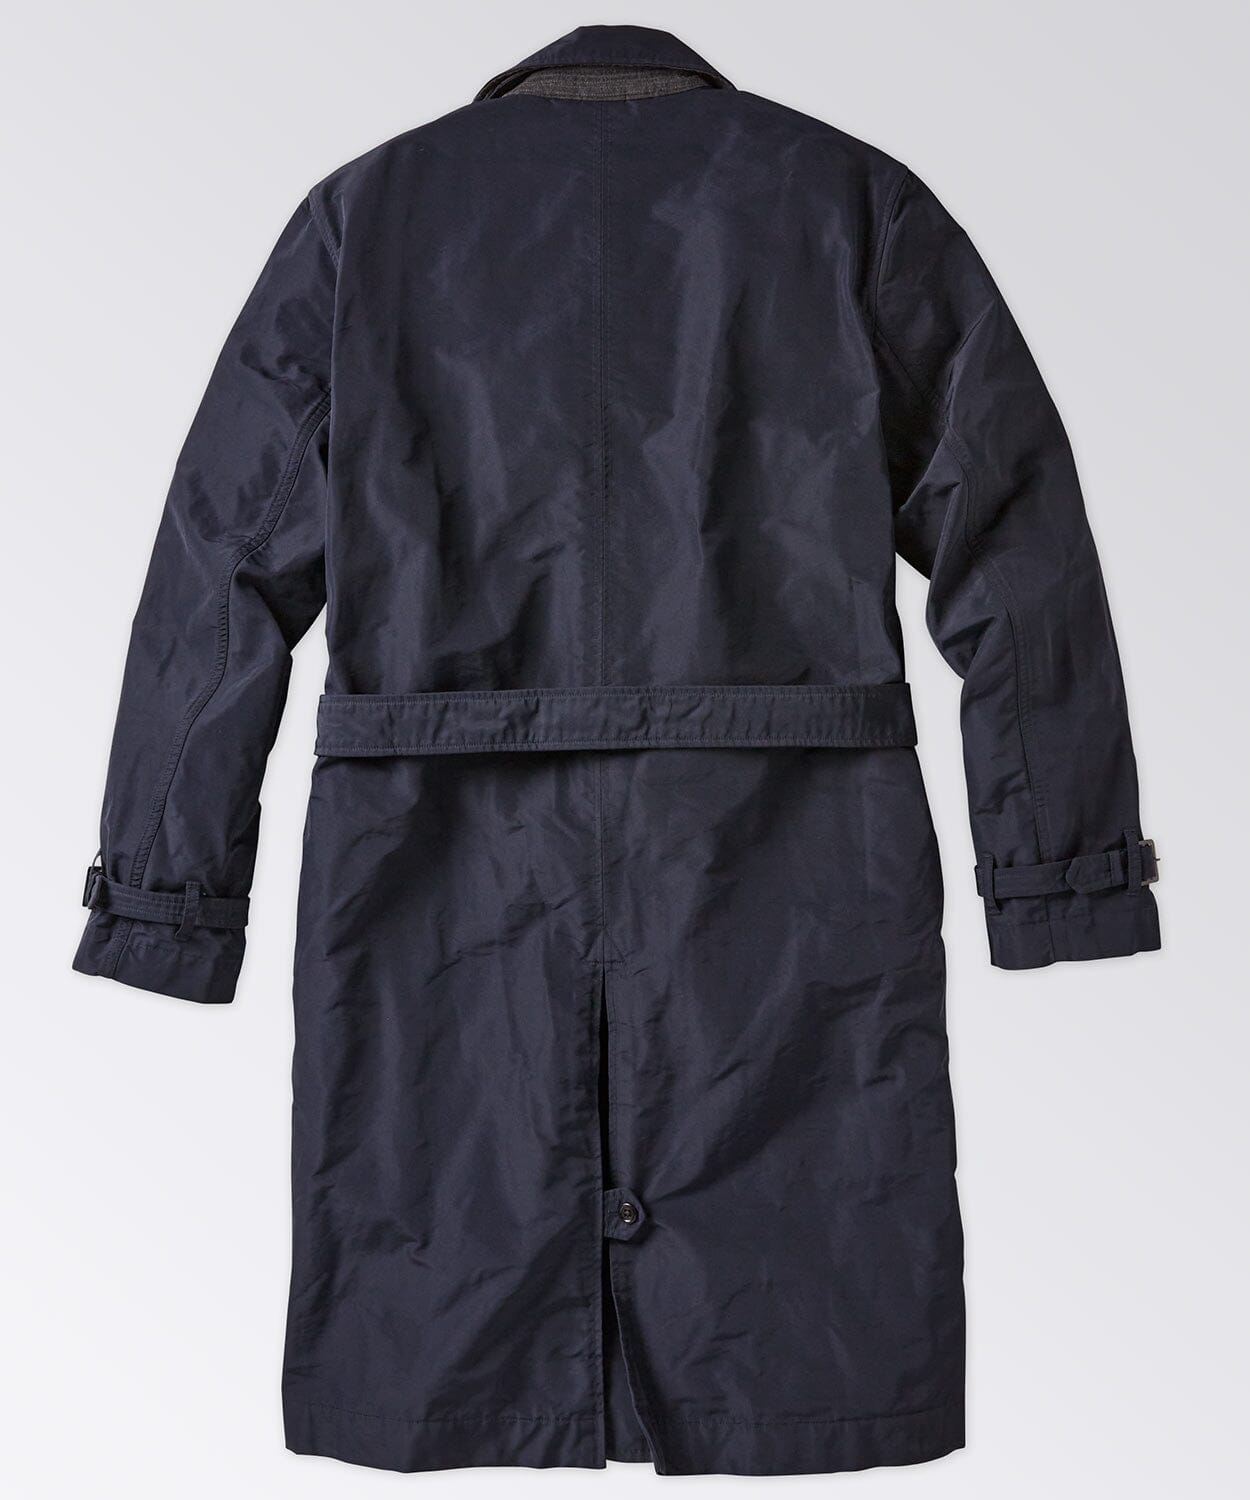 HERILL cotton trench coat ダークNAVY 22344円引き